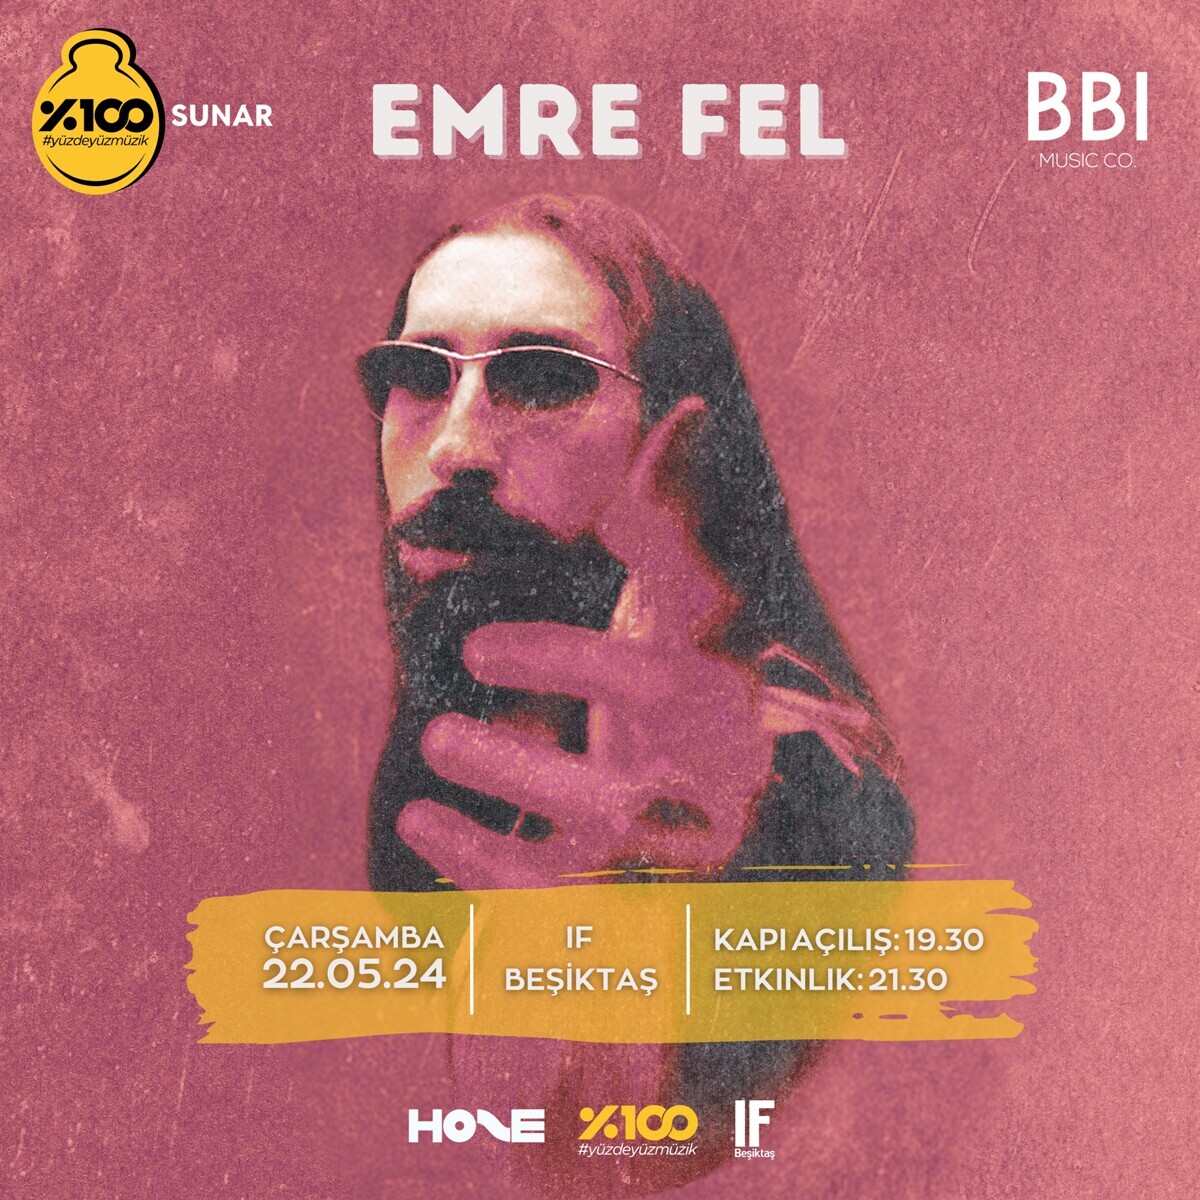 22 Mayıs Emre Fel IF Performance Hall Beşiktaş Konser Bileti